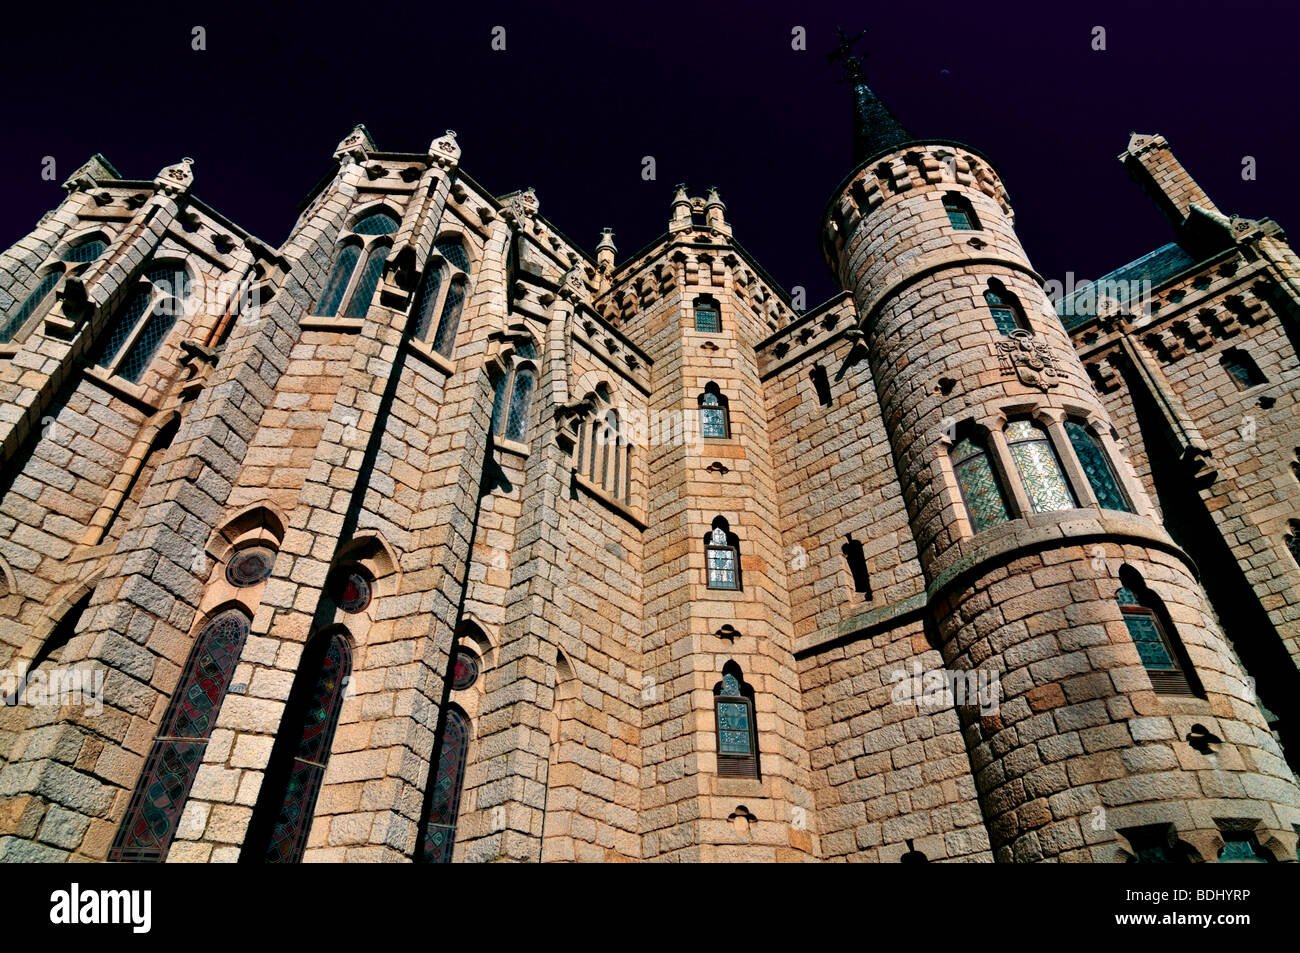 Spagna, San Giacomo modo: Palazzo del Vescovo di Antonio Gaudí Foto Stock